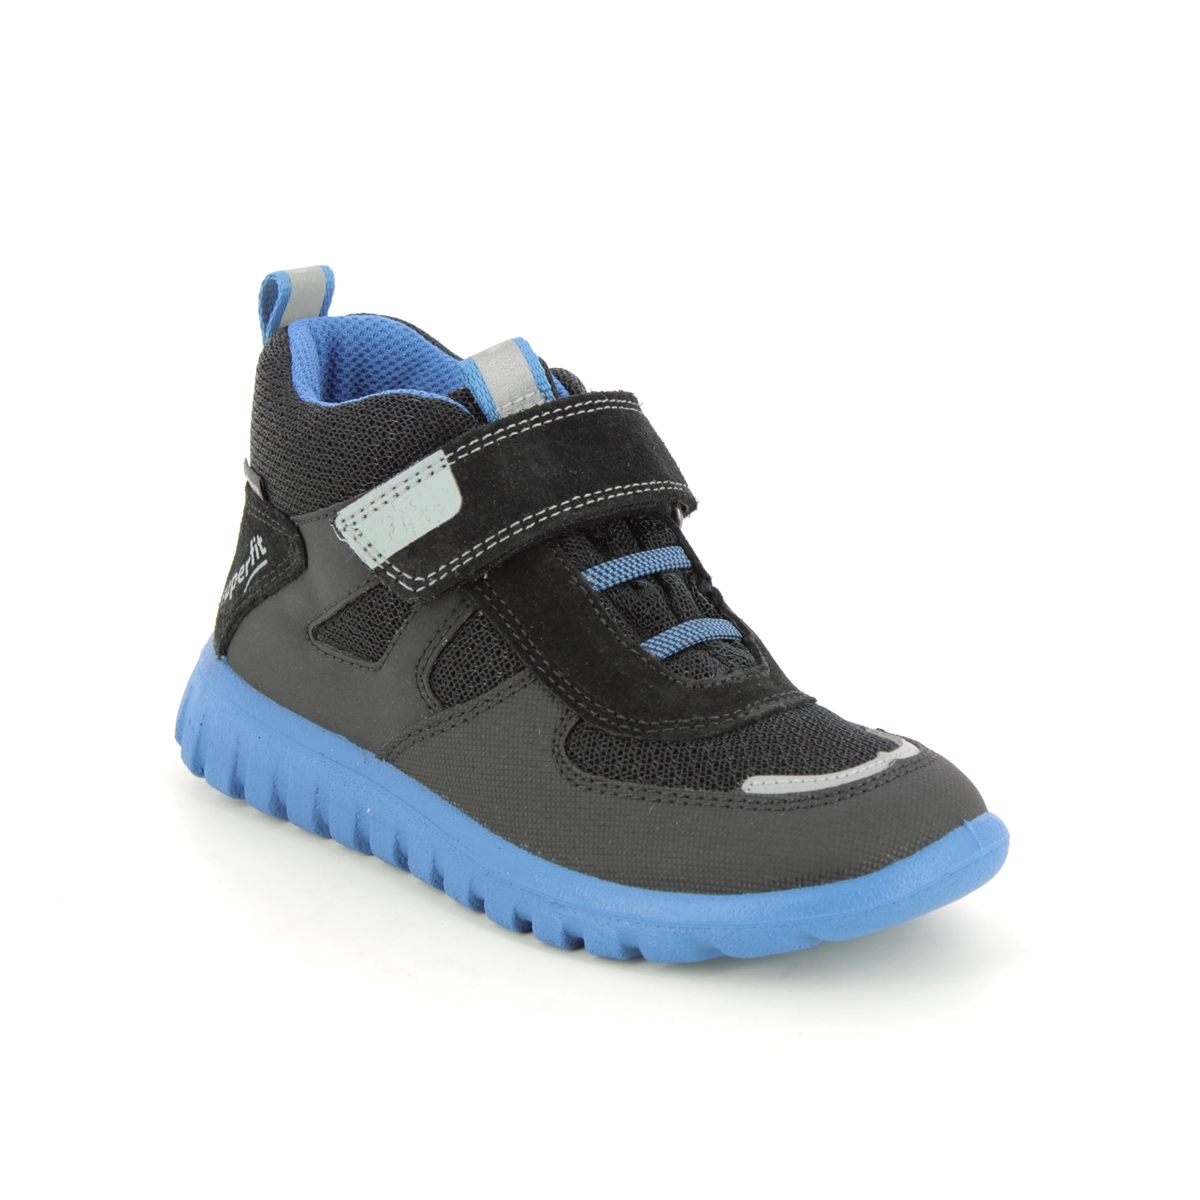 Superfit Sport7 Mini Gtx Black-Blue Kids Boys Boots 1006196-0000 In Size 29 In Plain Black-Blue For kids